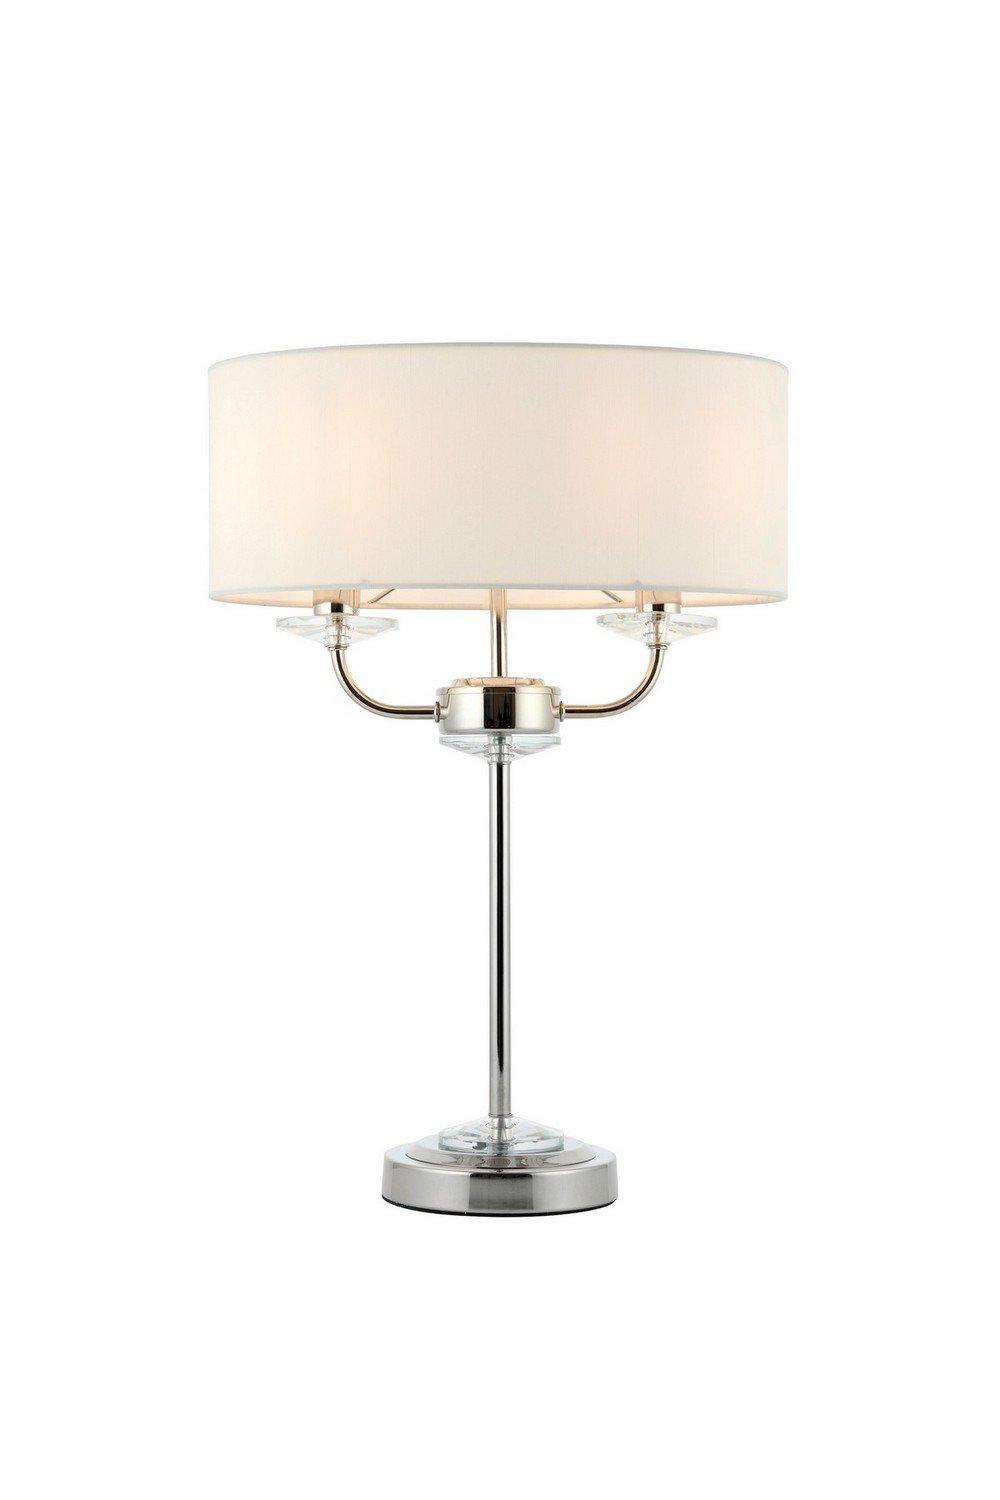 Nixon 2 Light Table Lamp Nickel Plate White Silk Effect Crystal Glass E14